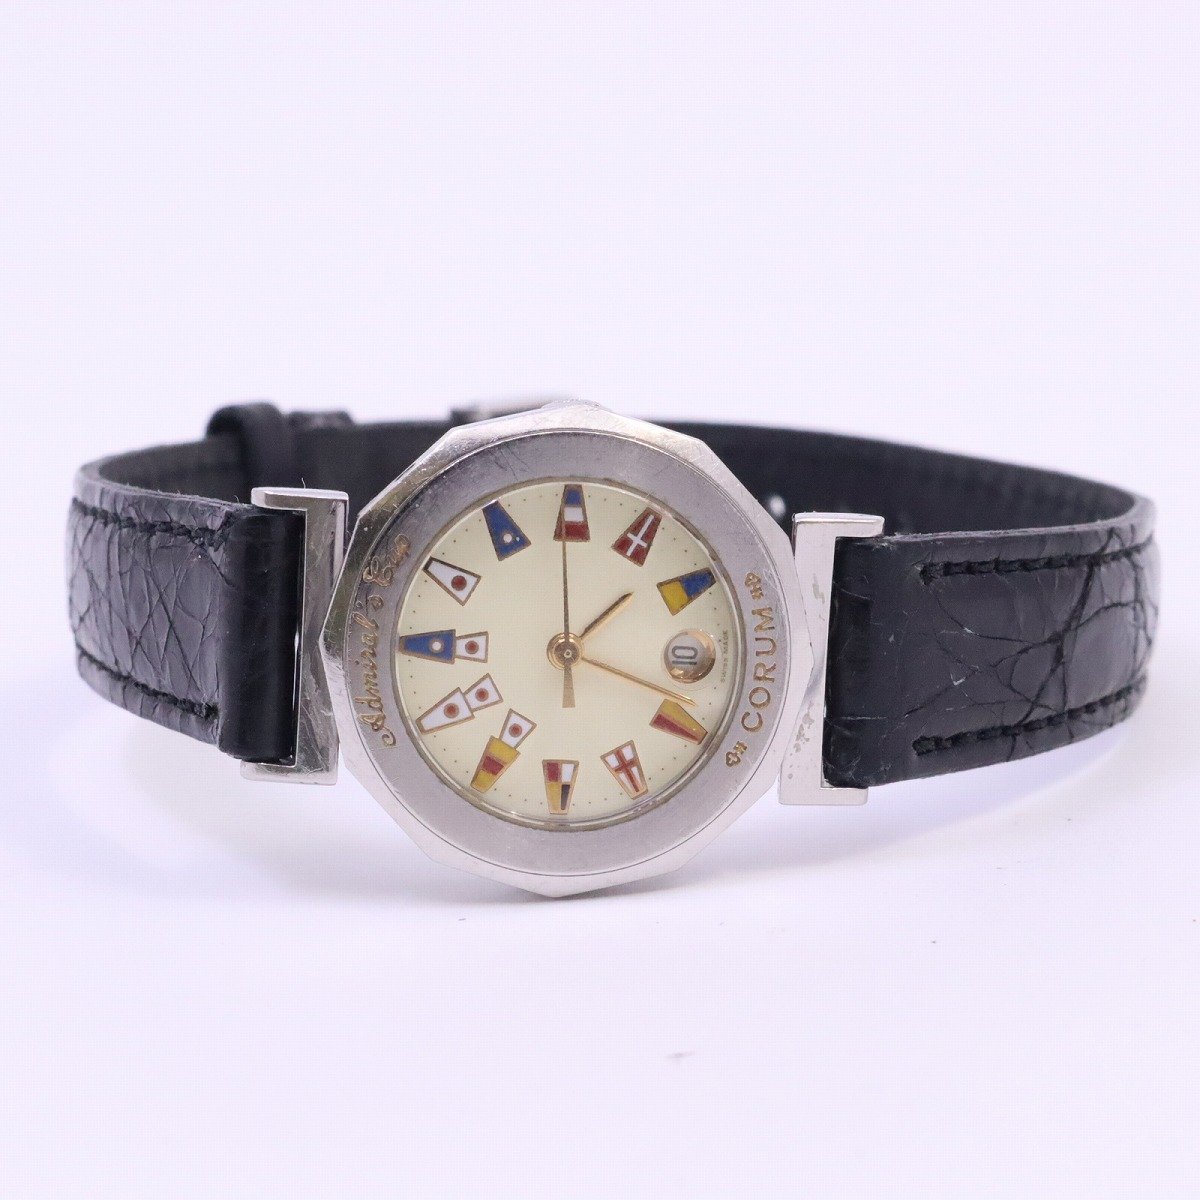  Corum Admiral z cup quartz lady's wristwatch ivory face after market belt 39.630.20[... pawnshop ]